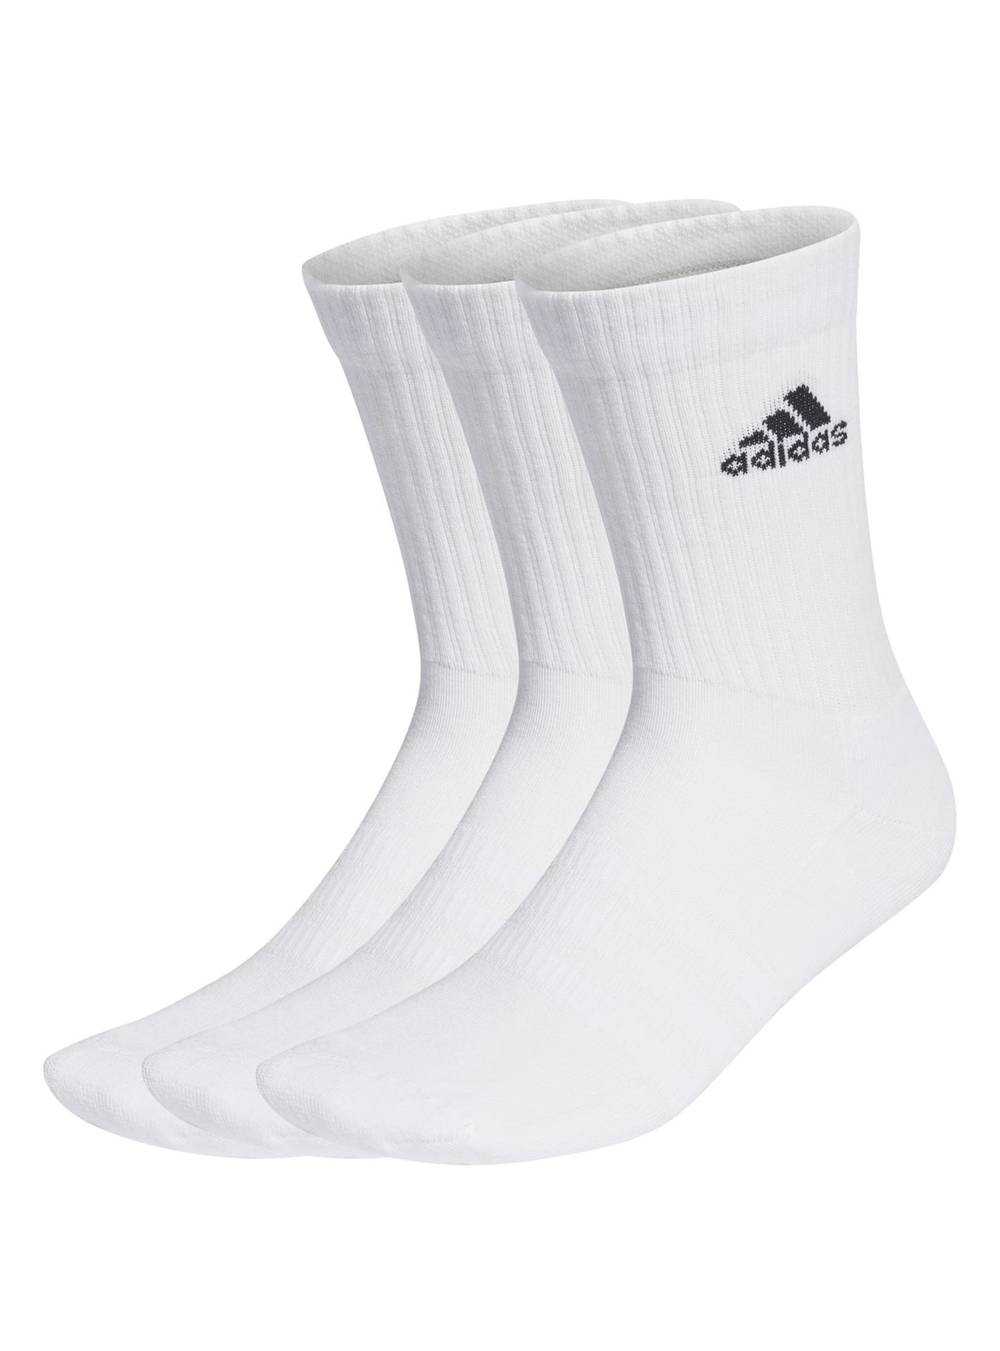 Adidas pack 3 calcetín urbana (color: blanco. talla: m)